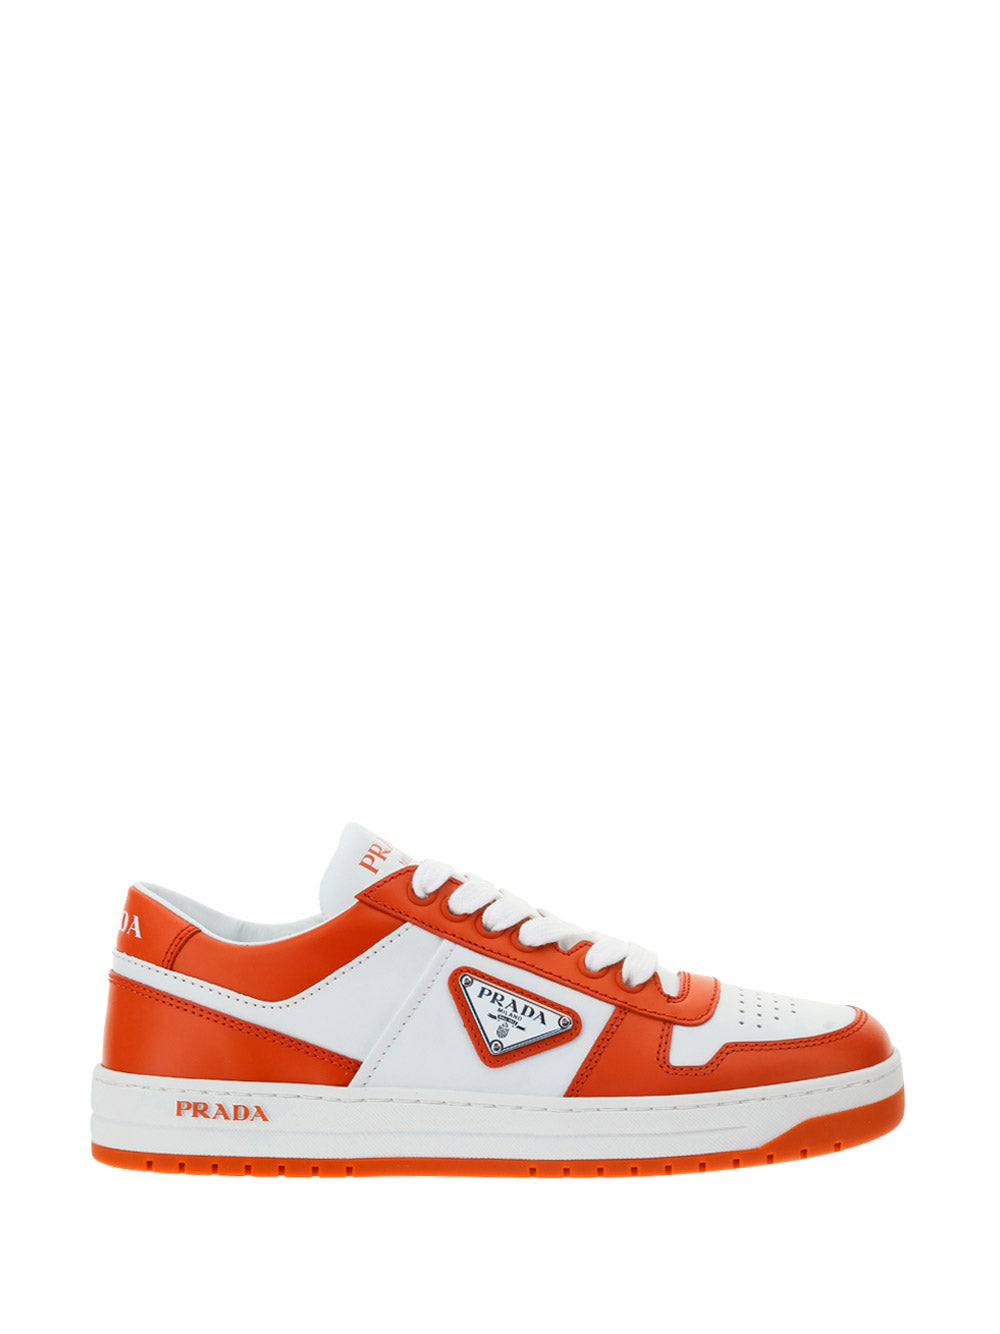 Downtown Leather Sneakers - Orange / White.